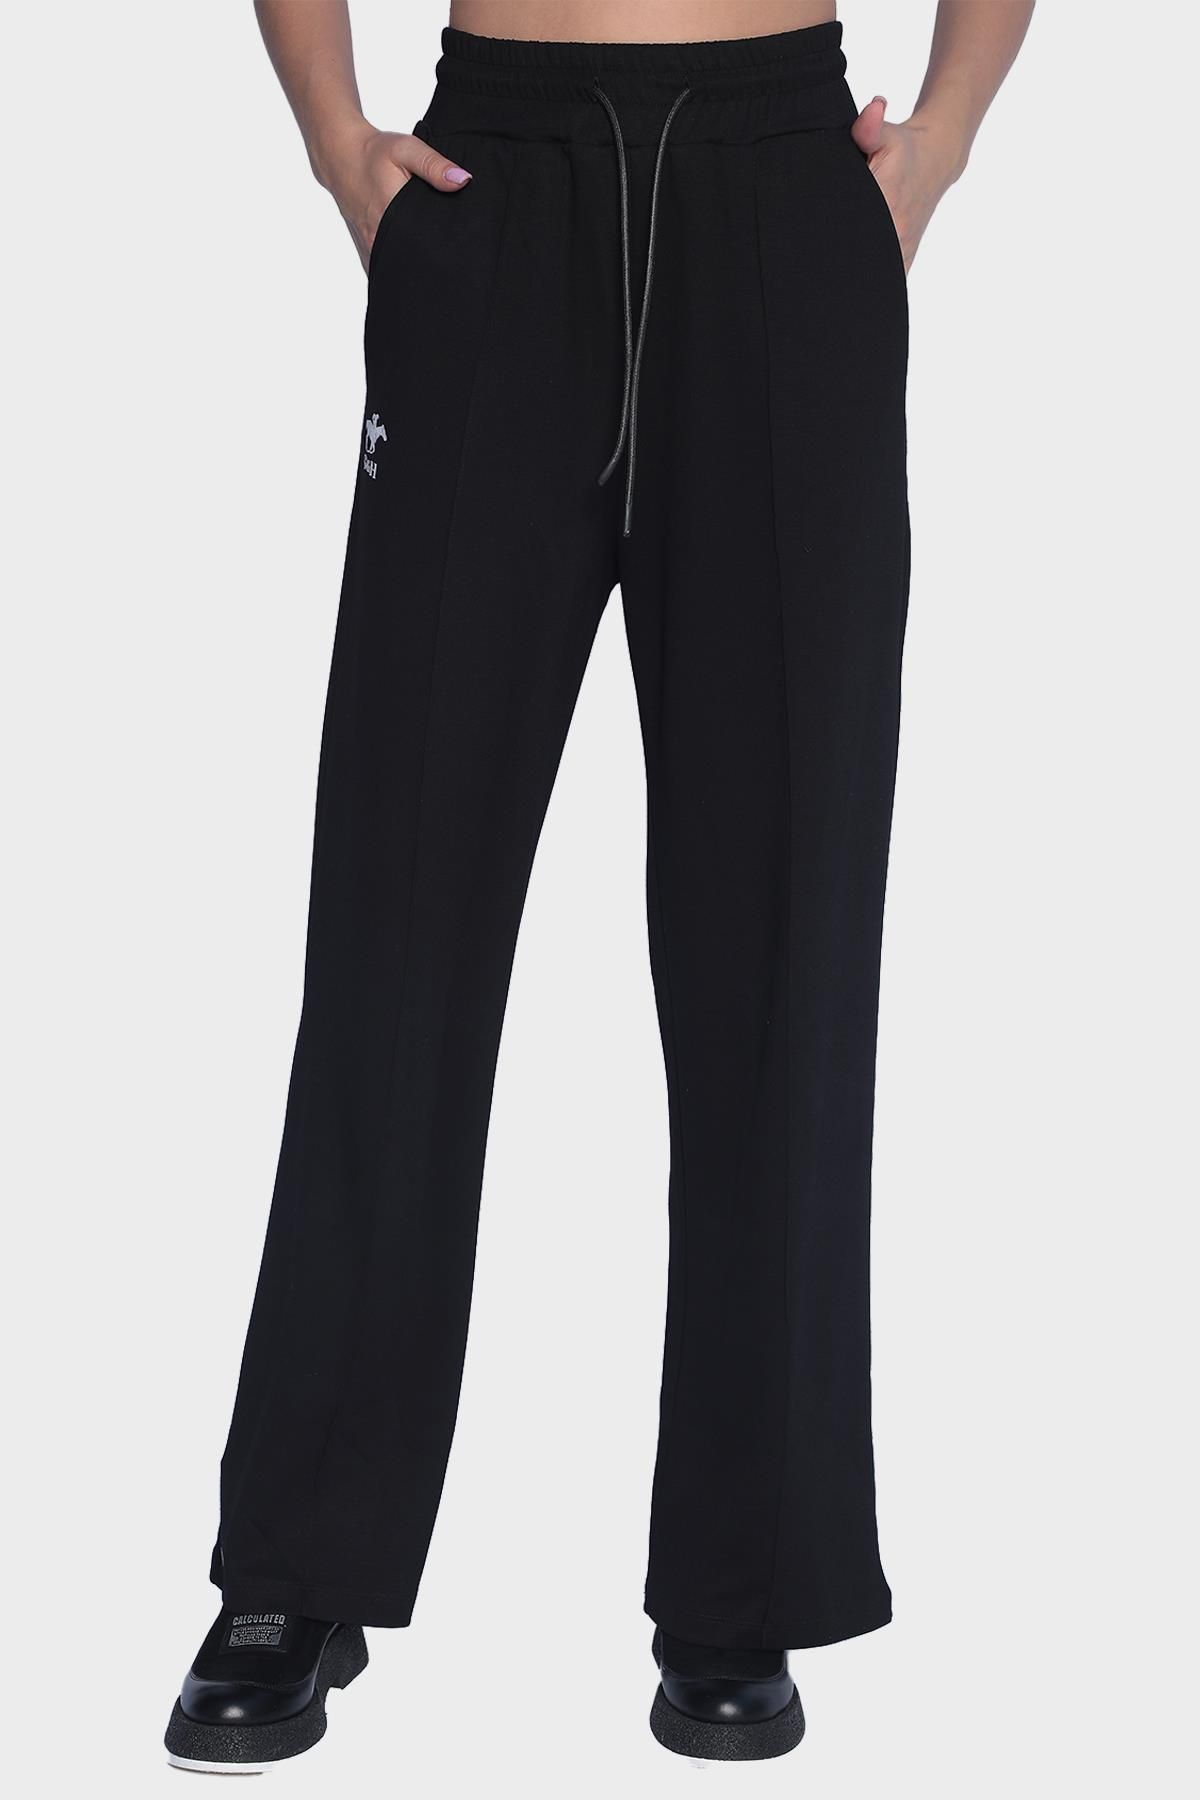 Womens elasticated waist wide-leg pocket detailed sweatpants - Black